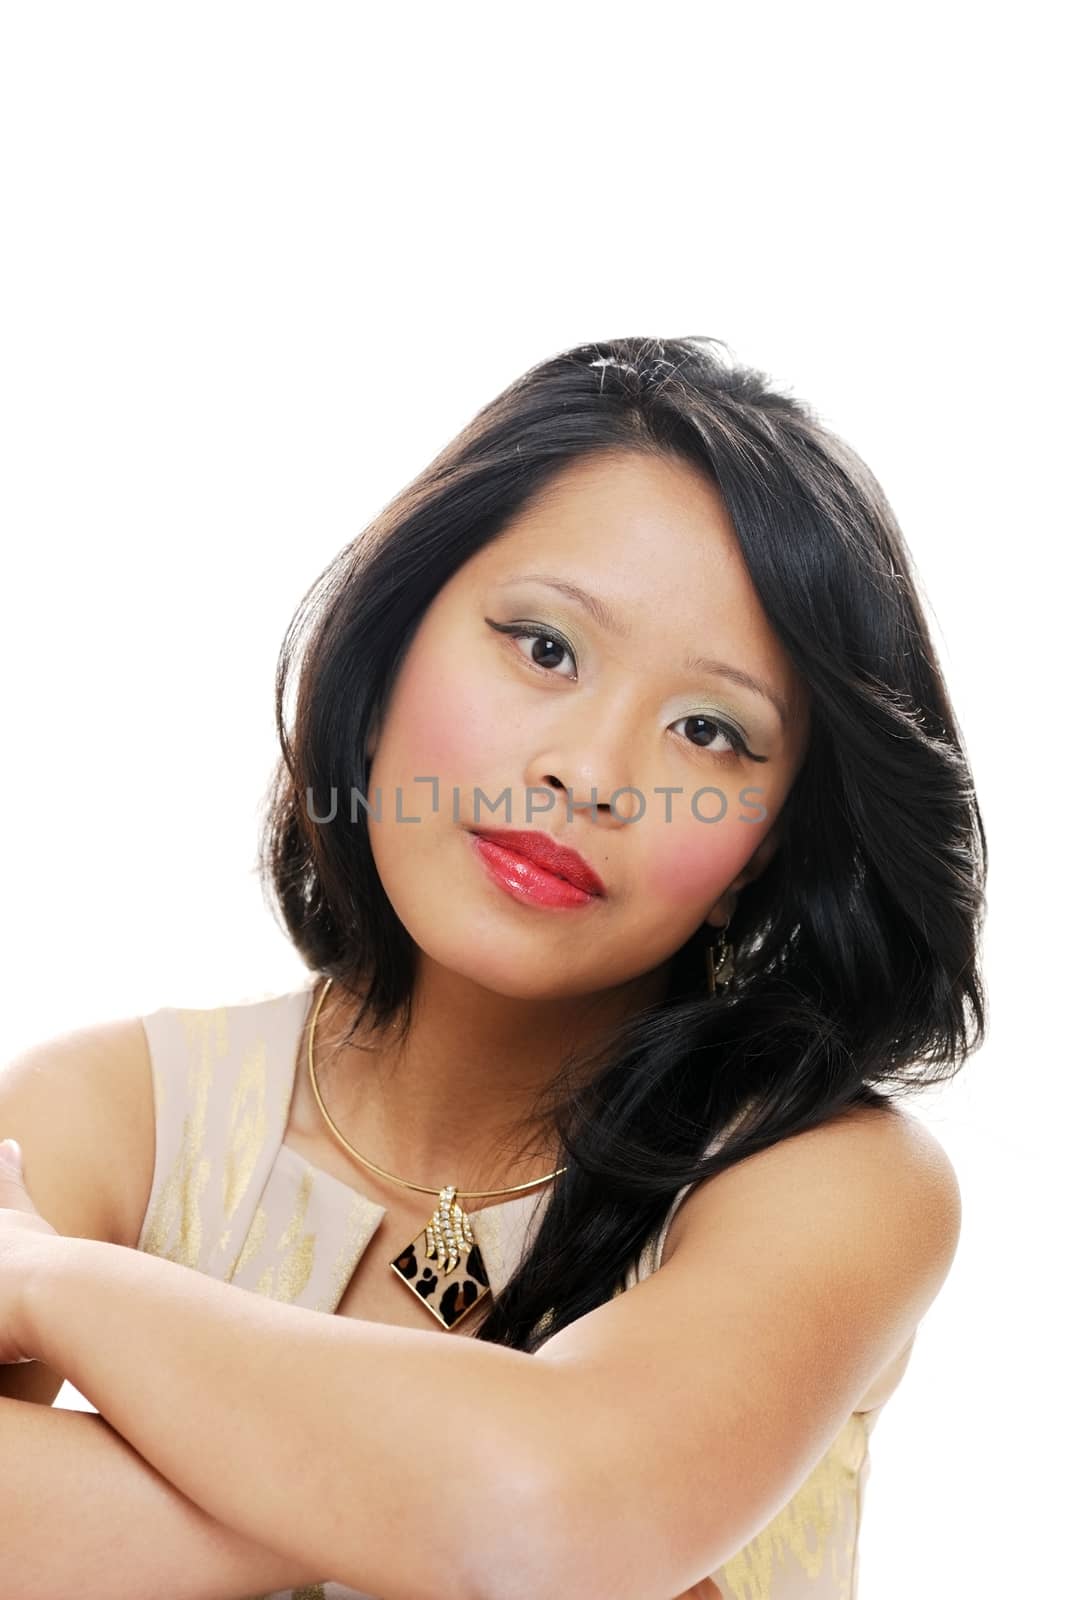 Asian girl posing looking serious in makeup